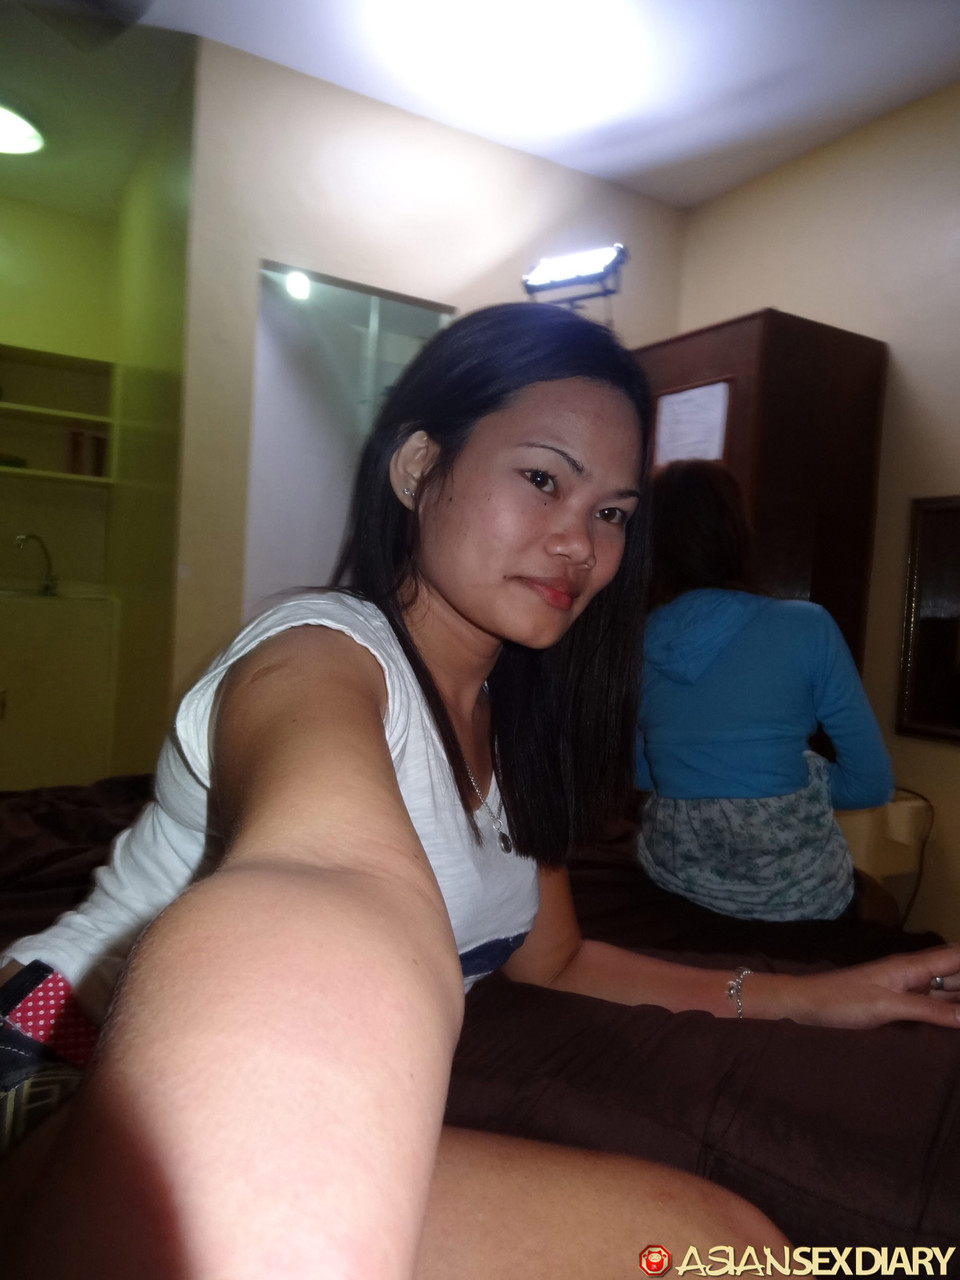 Horny Asian girls take selfies and fuck lucky tourist while enjoying free AC ポルノ写真 #422594962 | Asian Sex Diary Pics, Leann, Irish, Selfie, モバイルポルノ